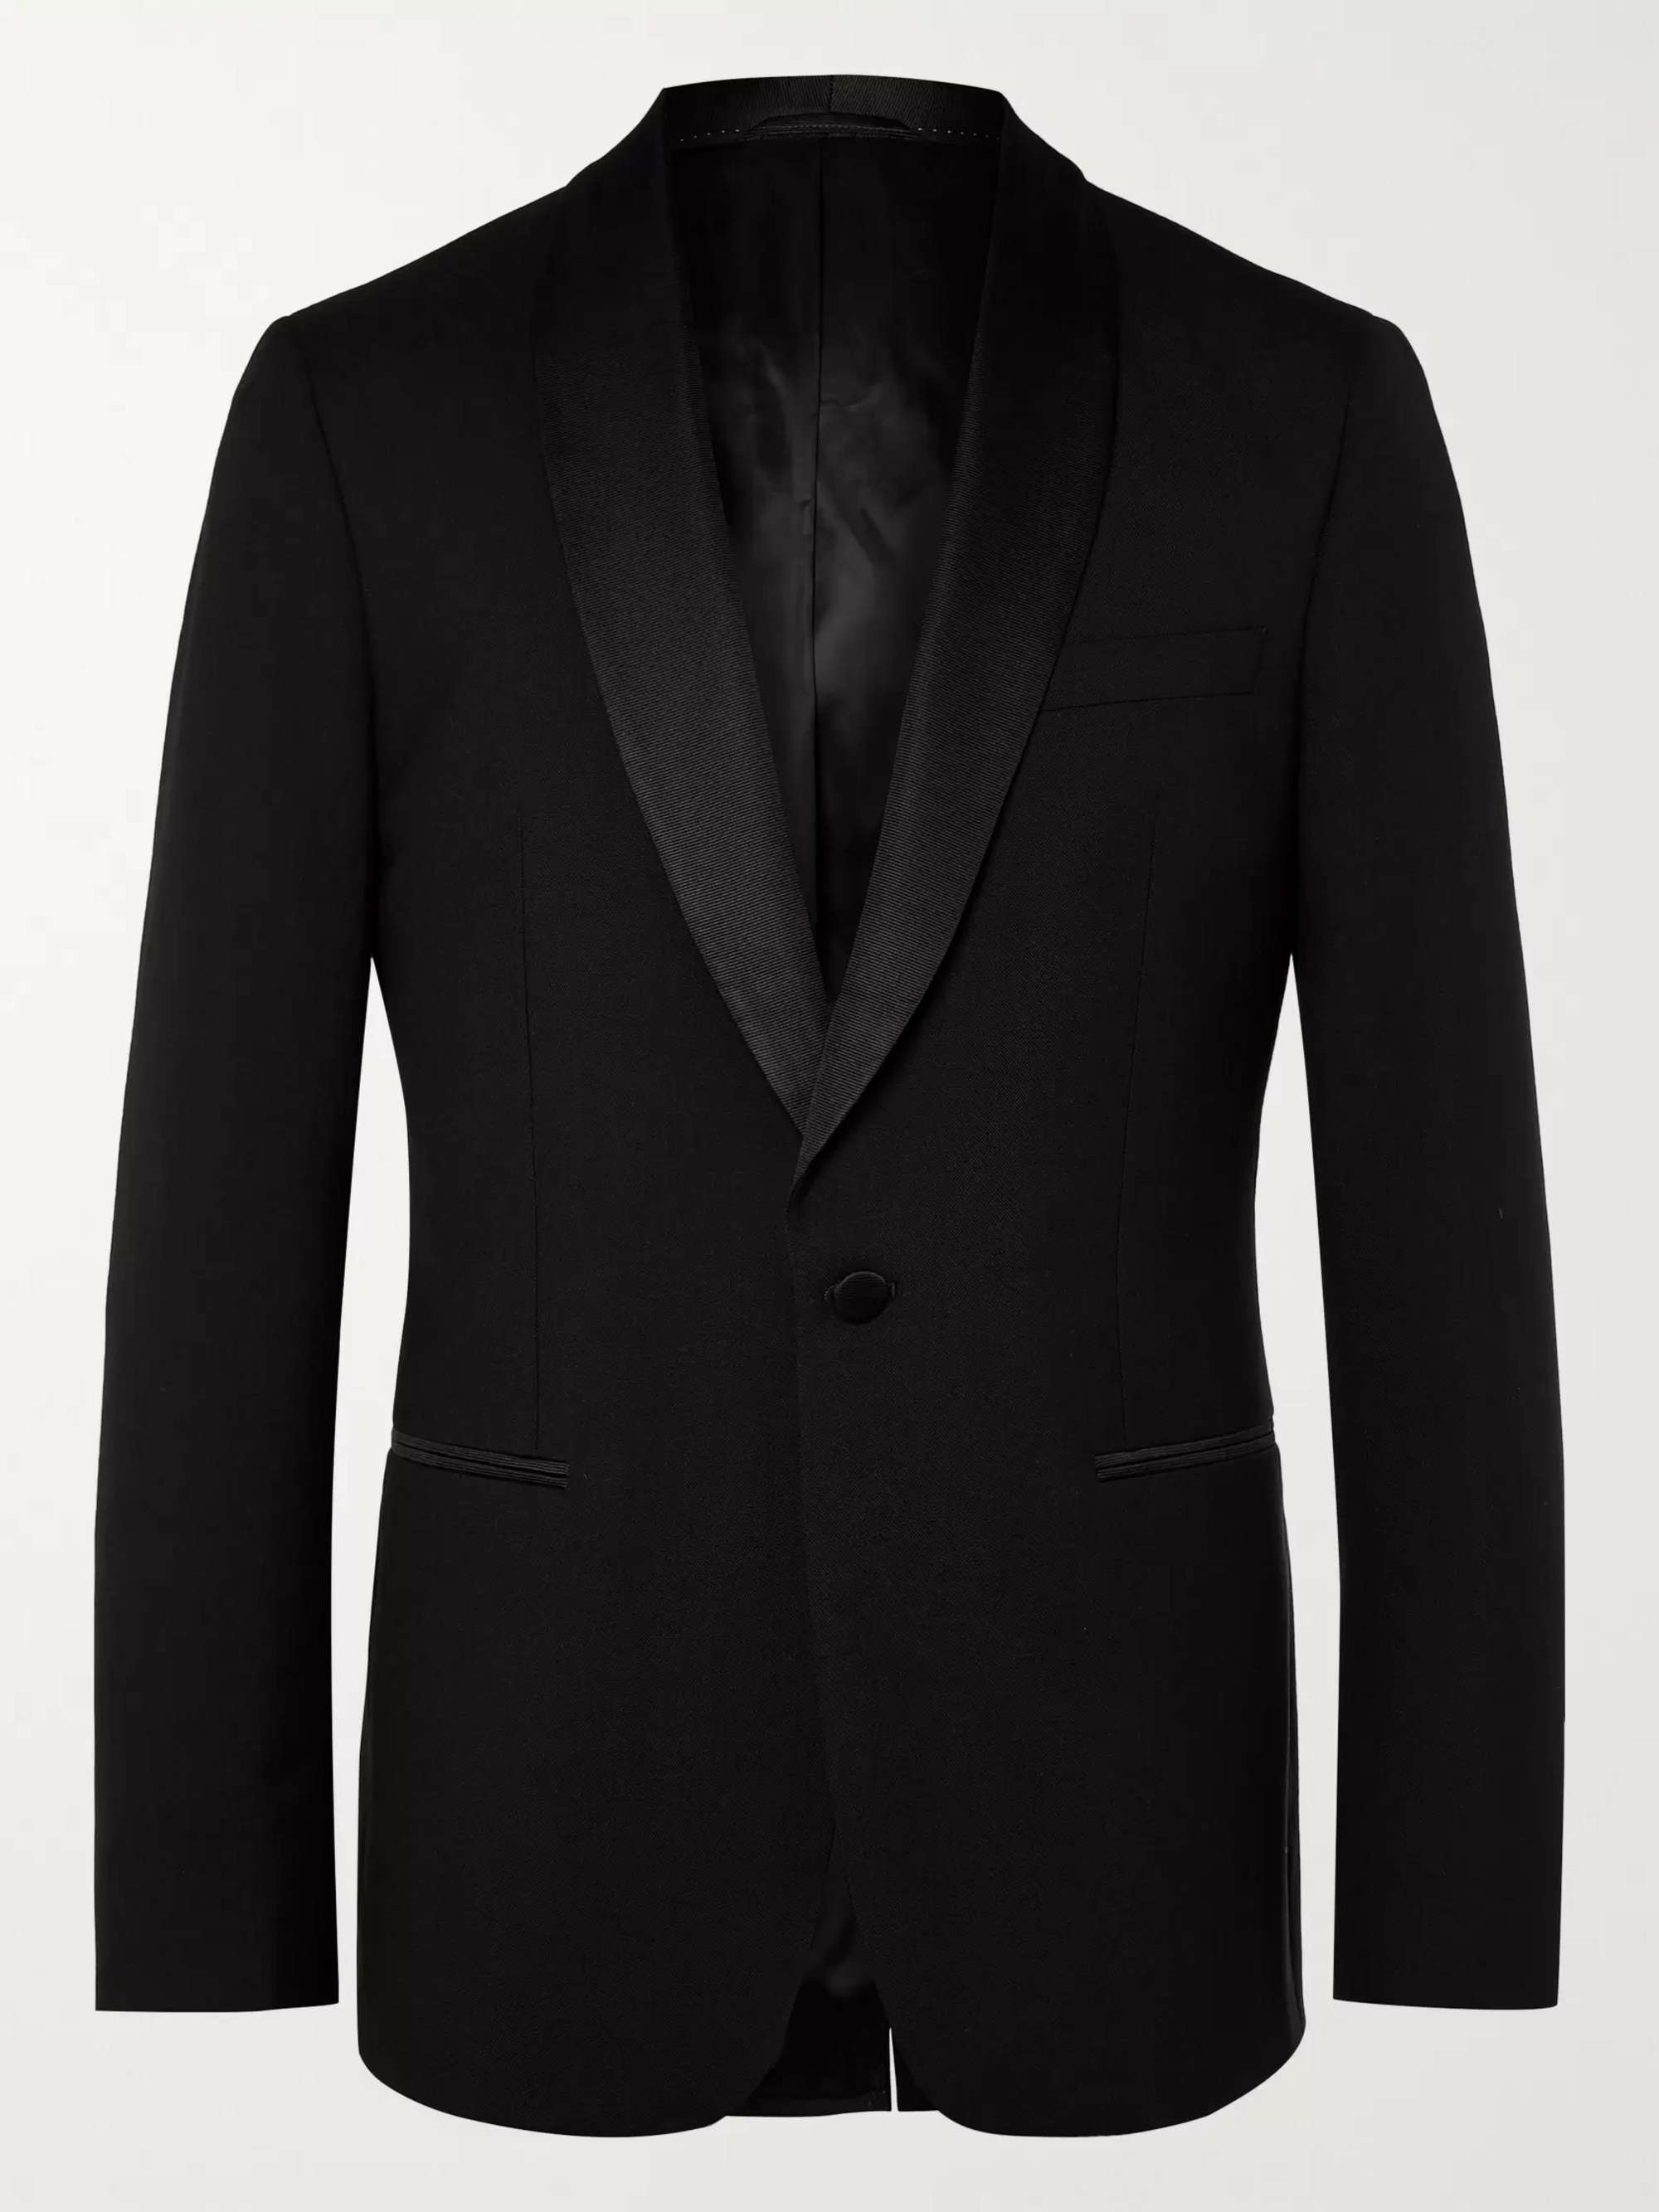 Mr P. Black Slim-Fit Shawl-Collar Faille-Trimmed Virgin Wool Tuxedo Jacket  For Men | Mr Porter